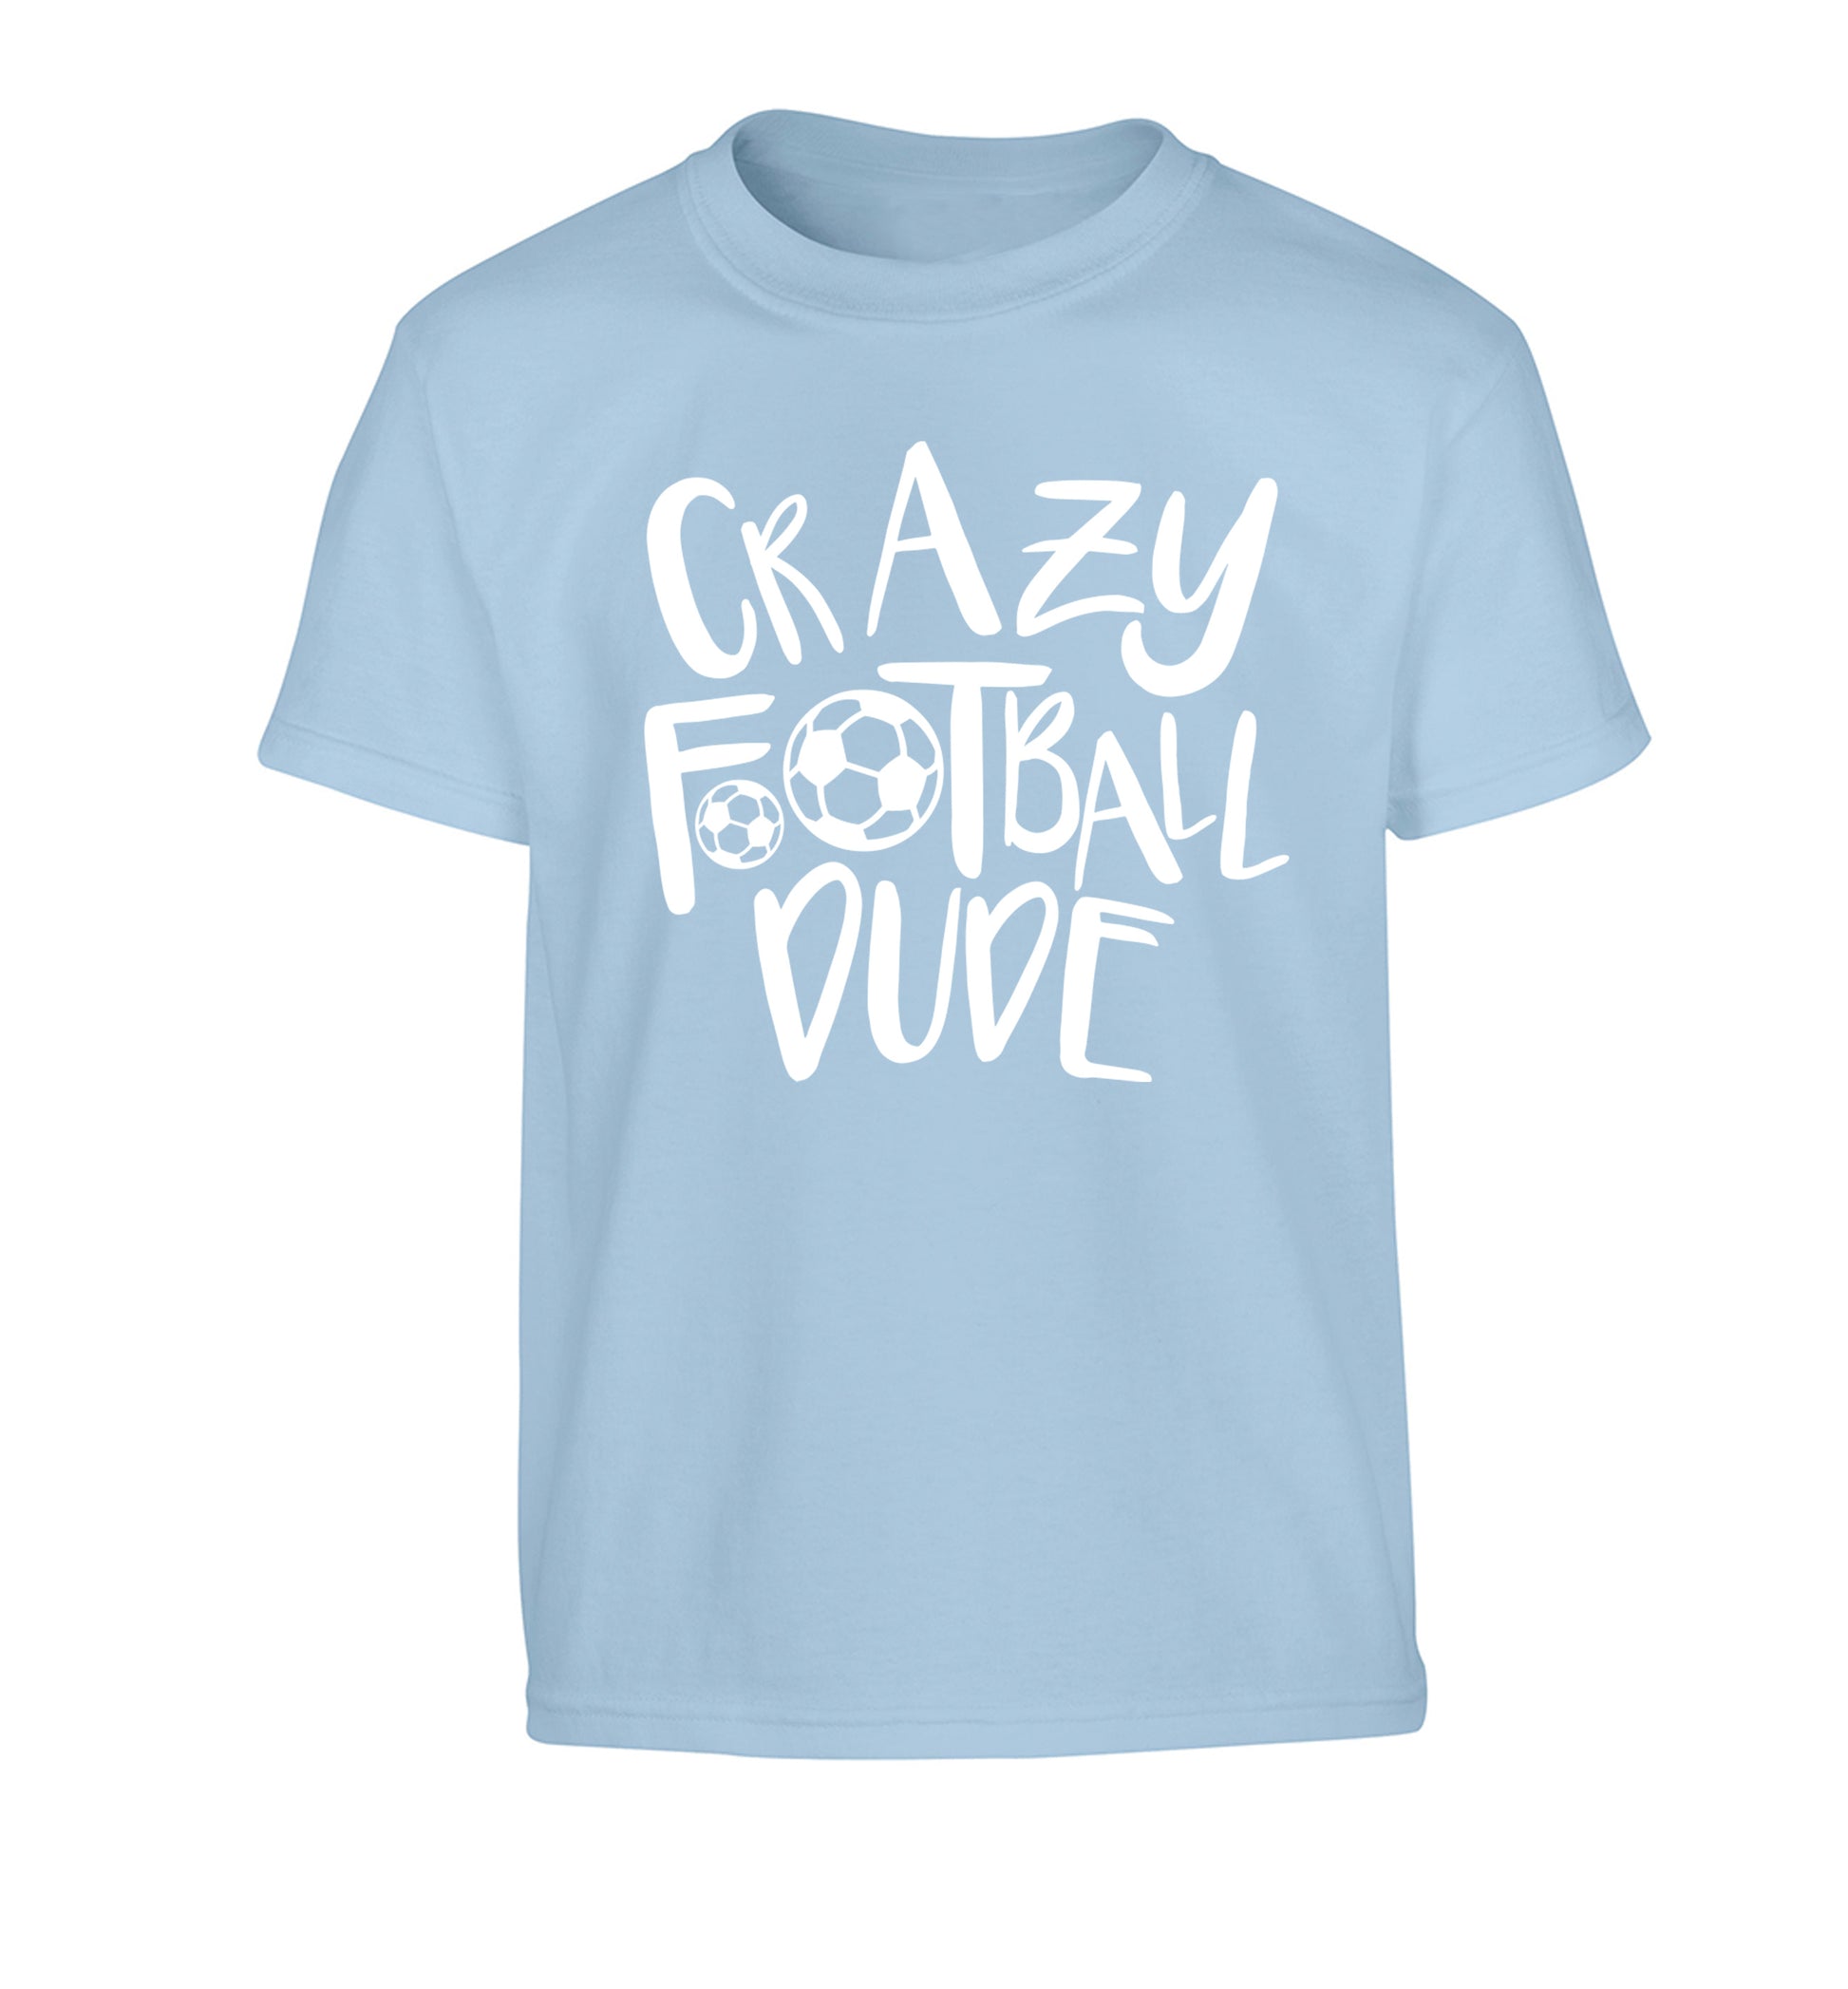 Crazy football dude Children's light blue Tshirt 12-14 Years